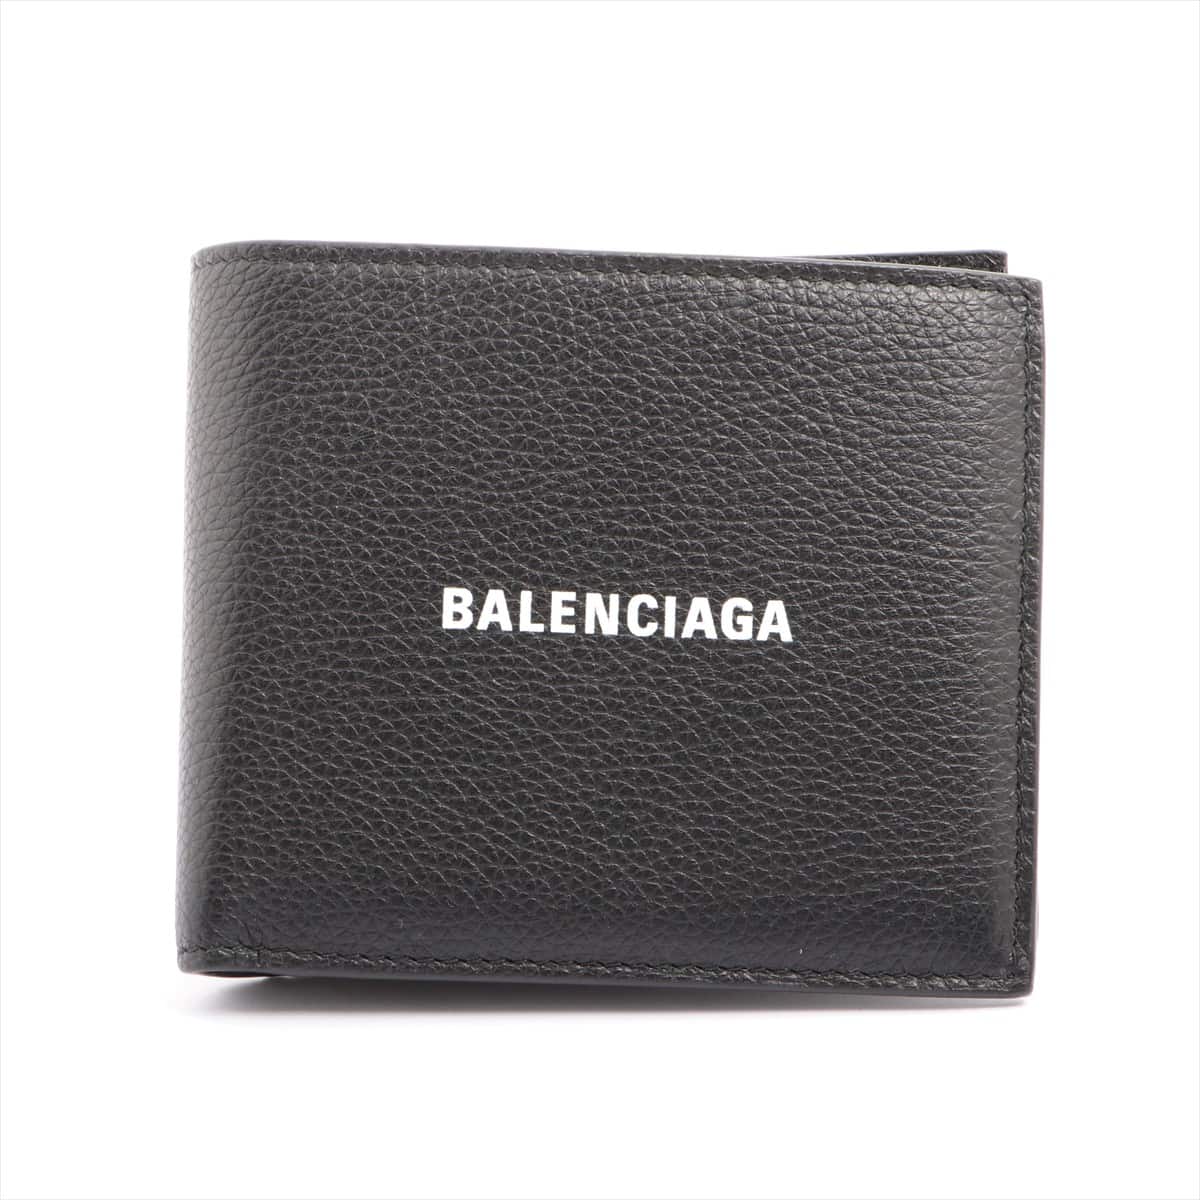 Balenciaga Everyday 487435 Leather Wallet Black